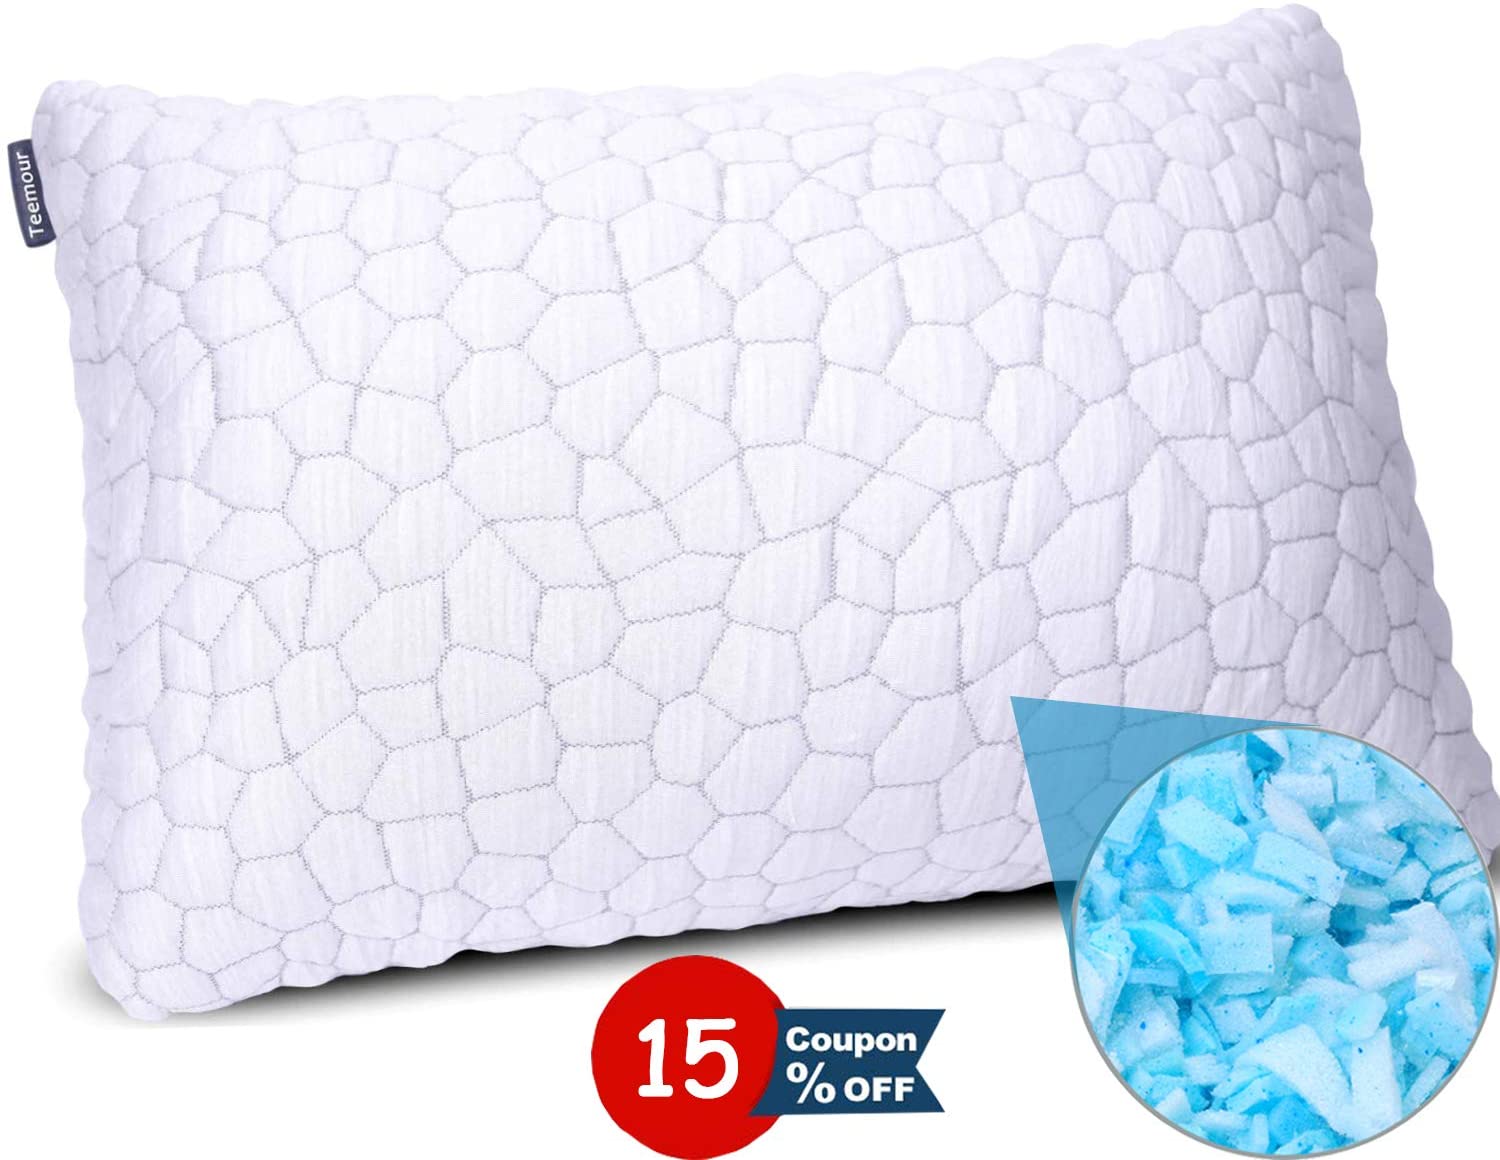 Teemour Adjustable Gel Sheredded Memory Foam Pillow